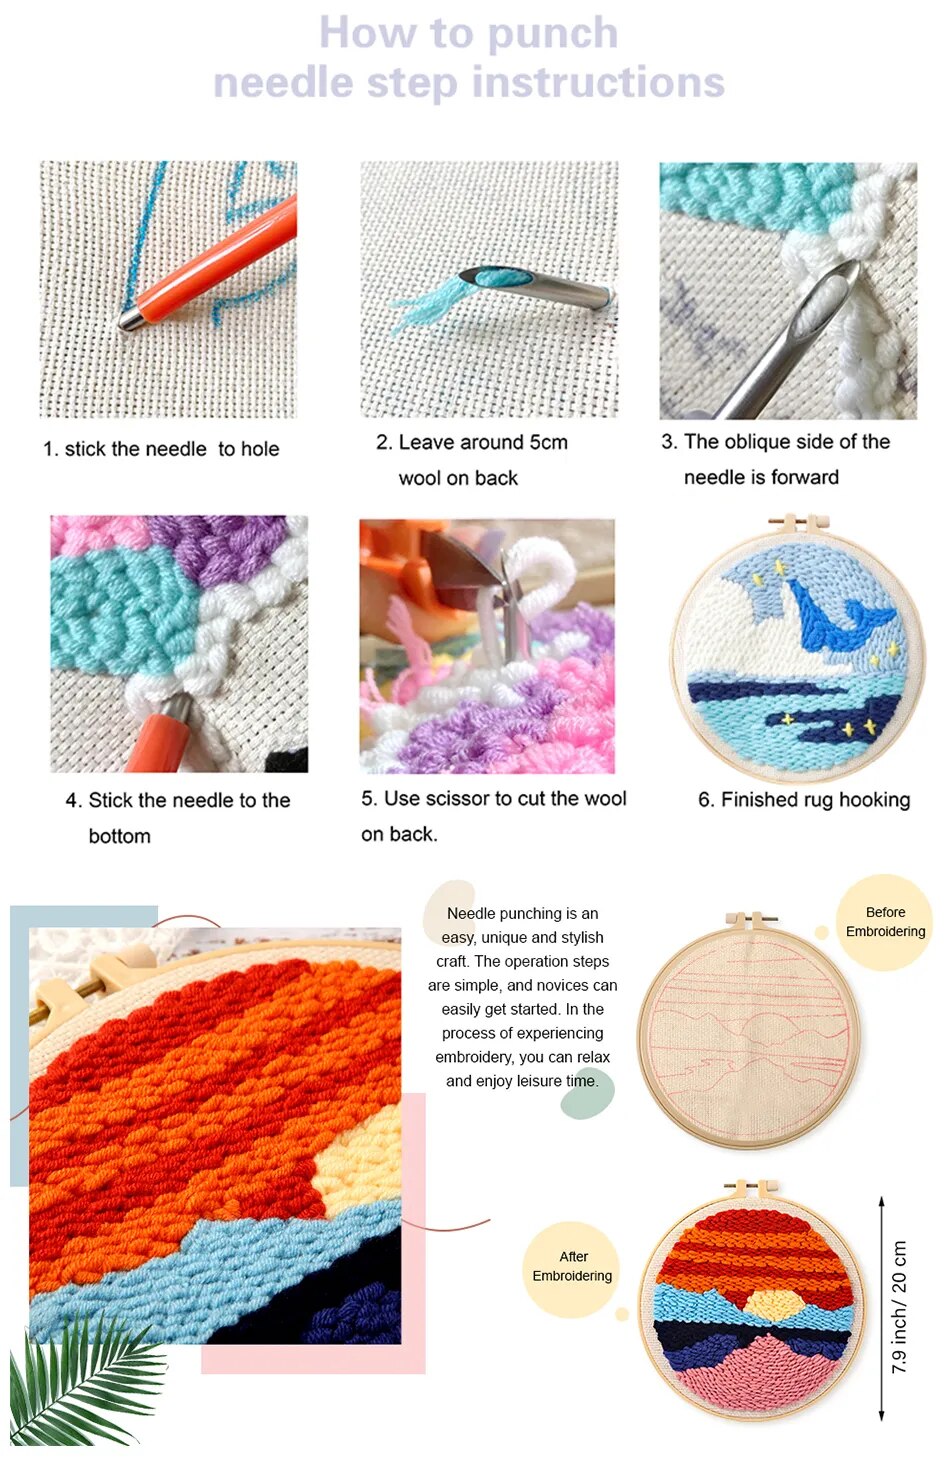 Christmas DIY Punch Needle Kits - Xmas Penguin